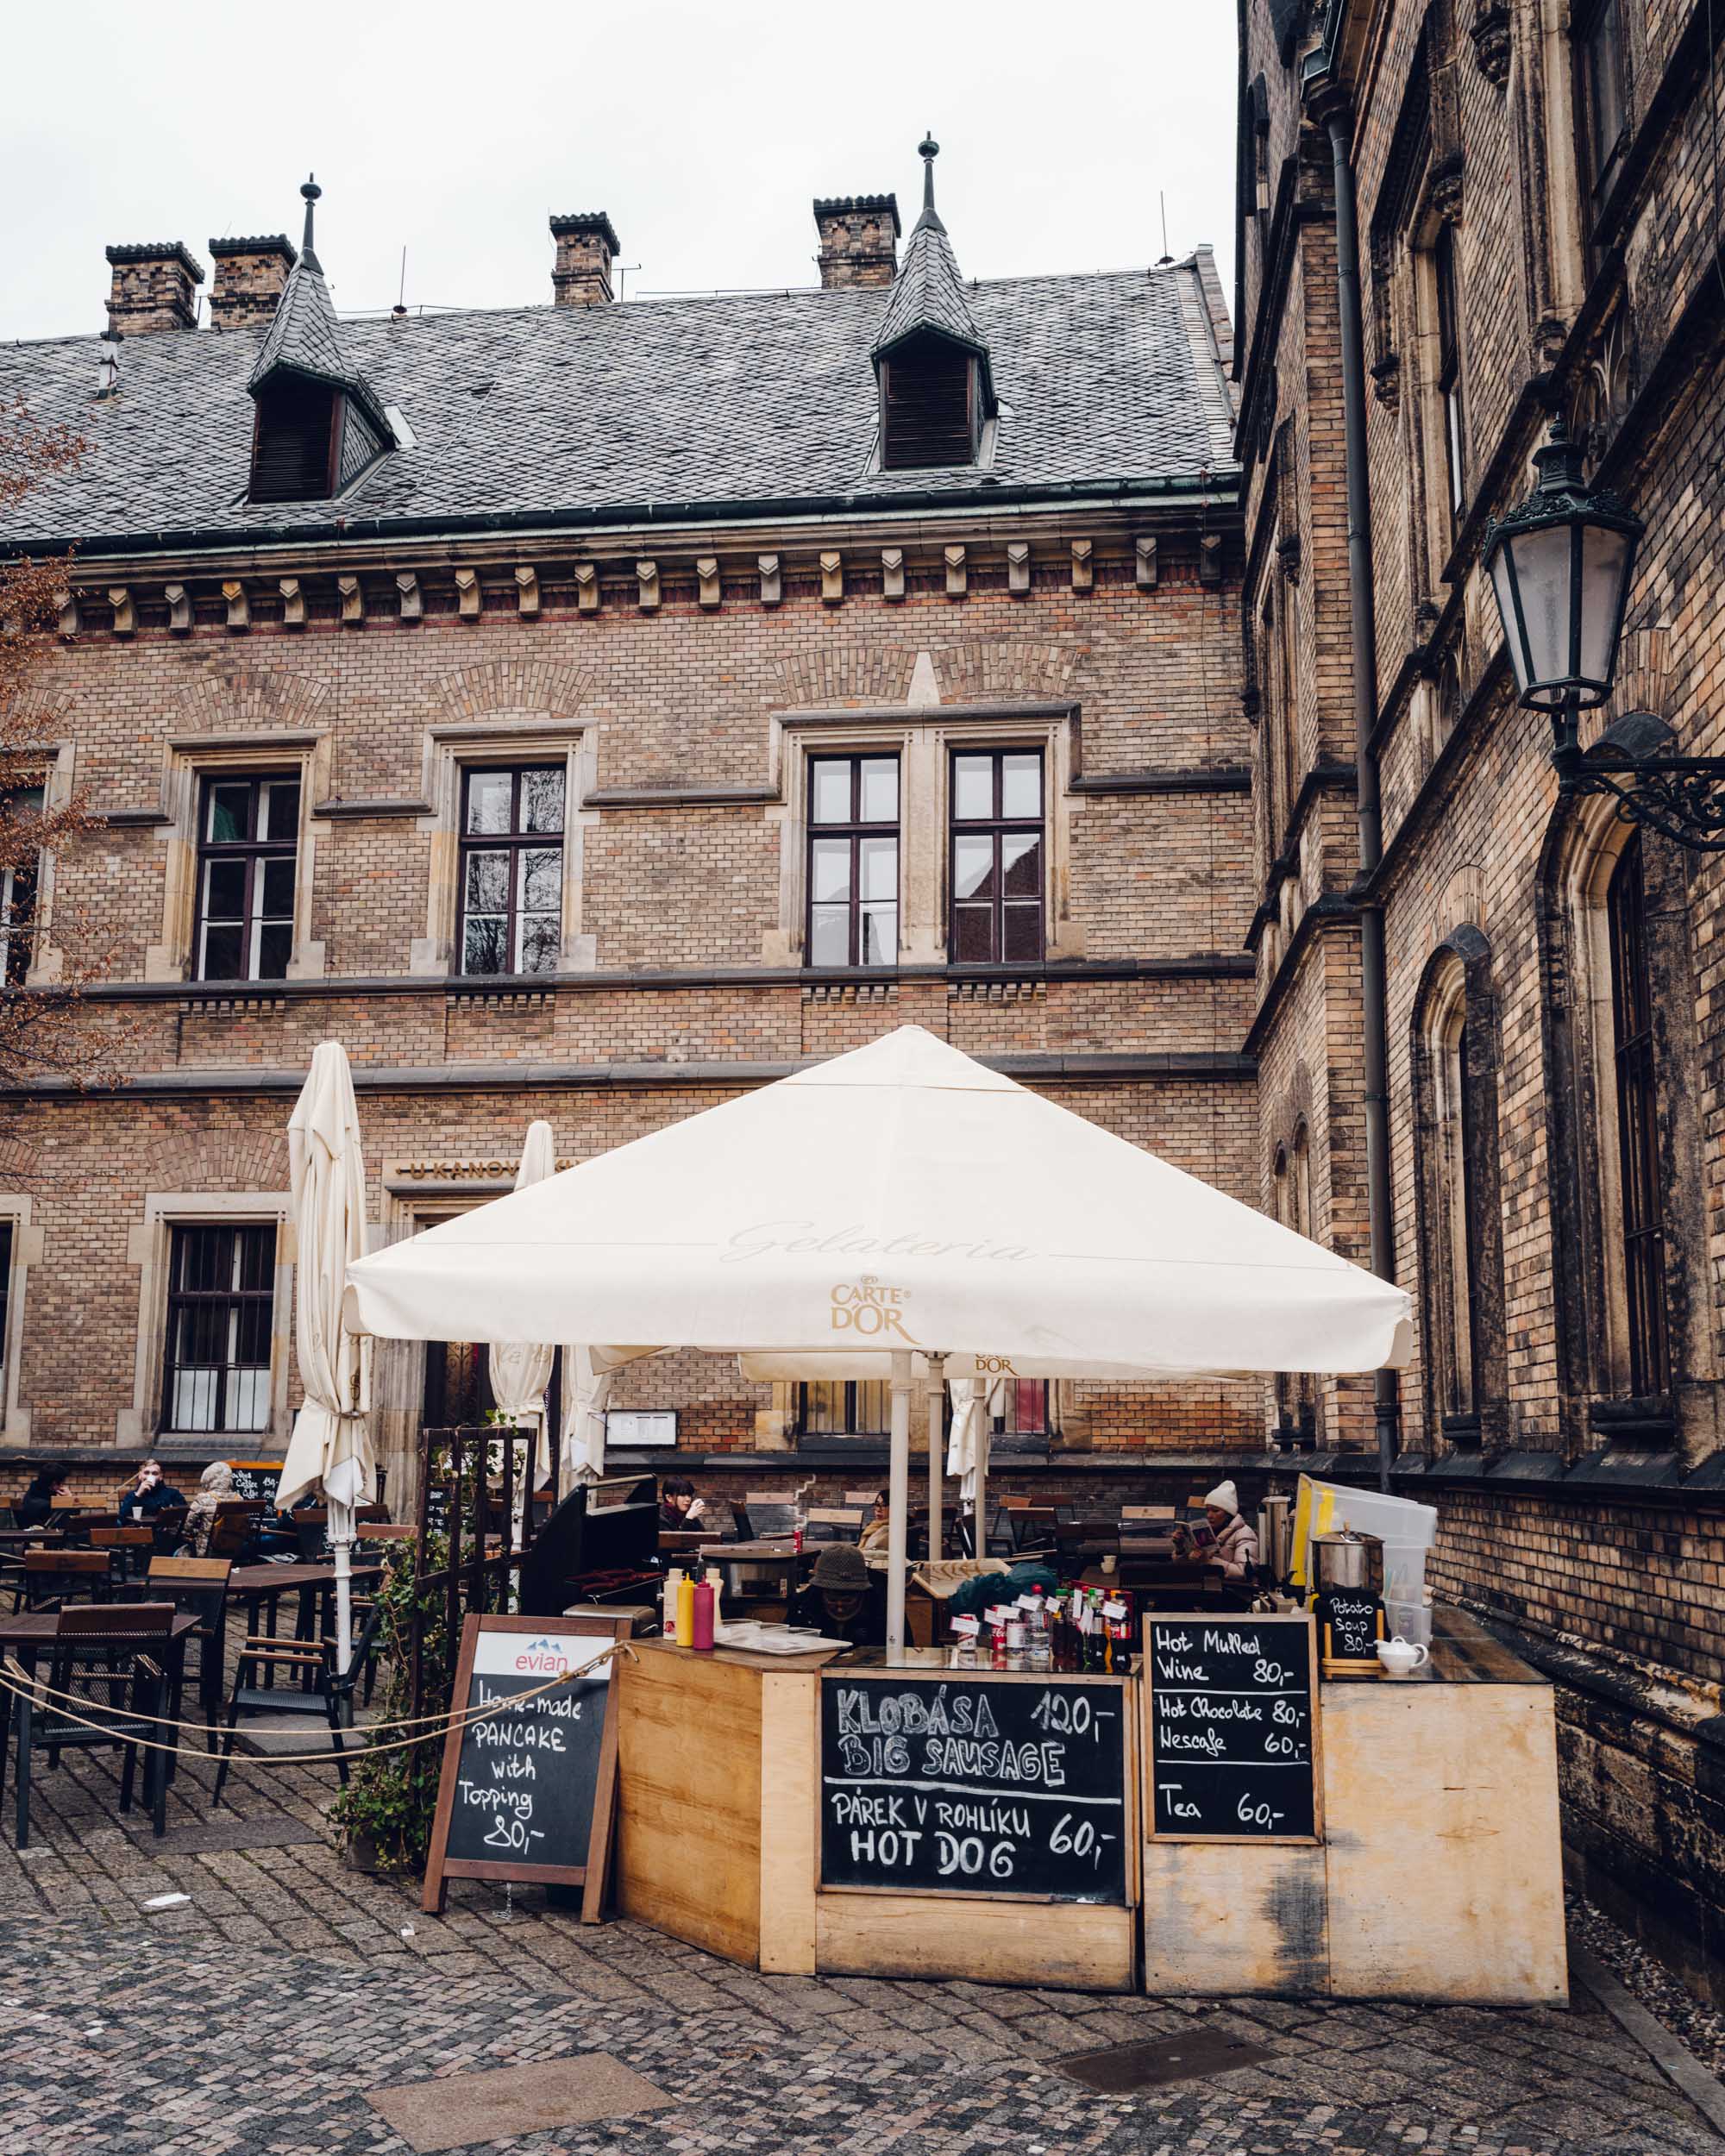 Outdoor cafe near Prague Castle in Czech Republic